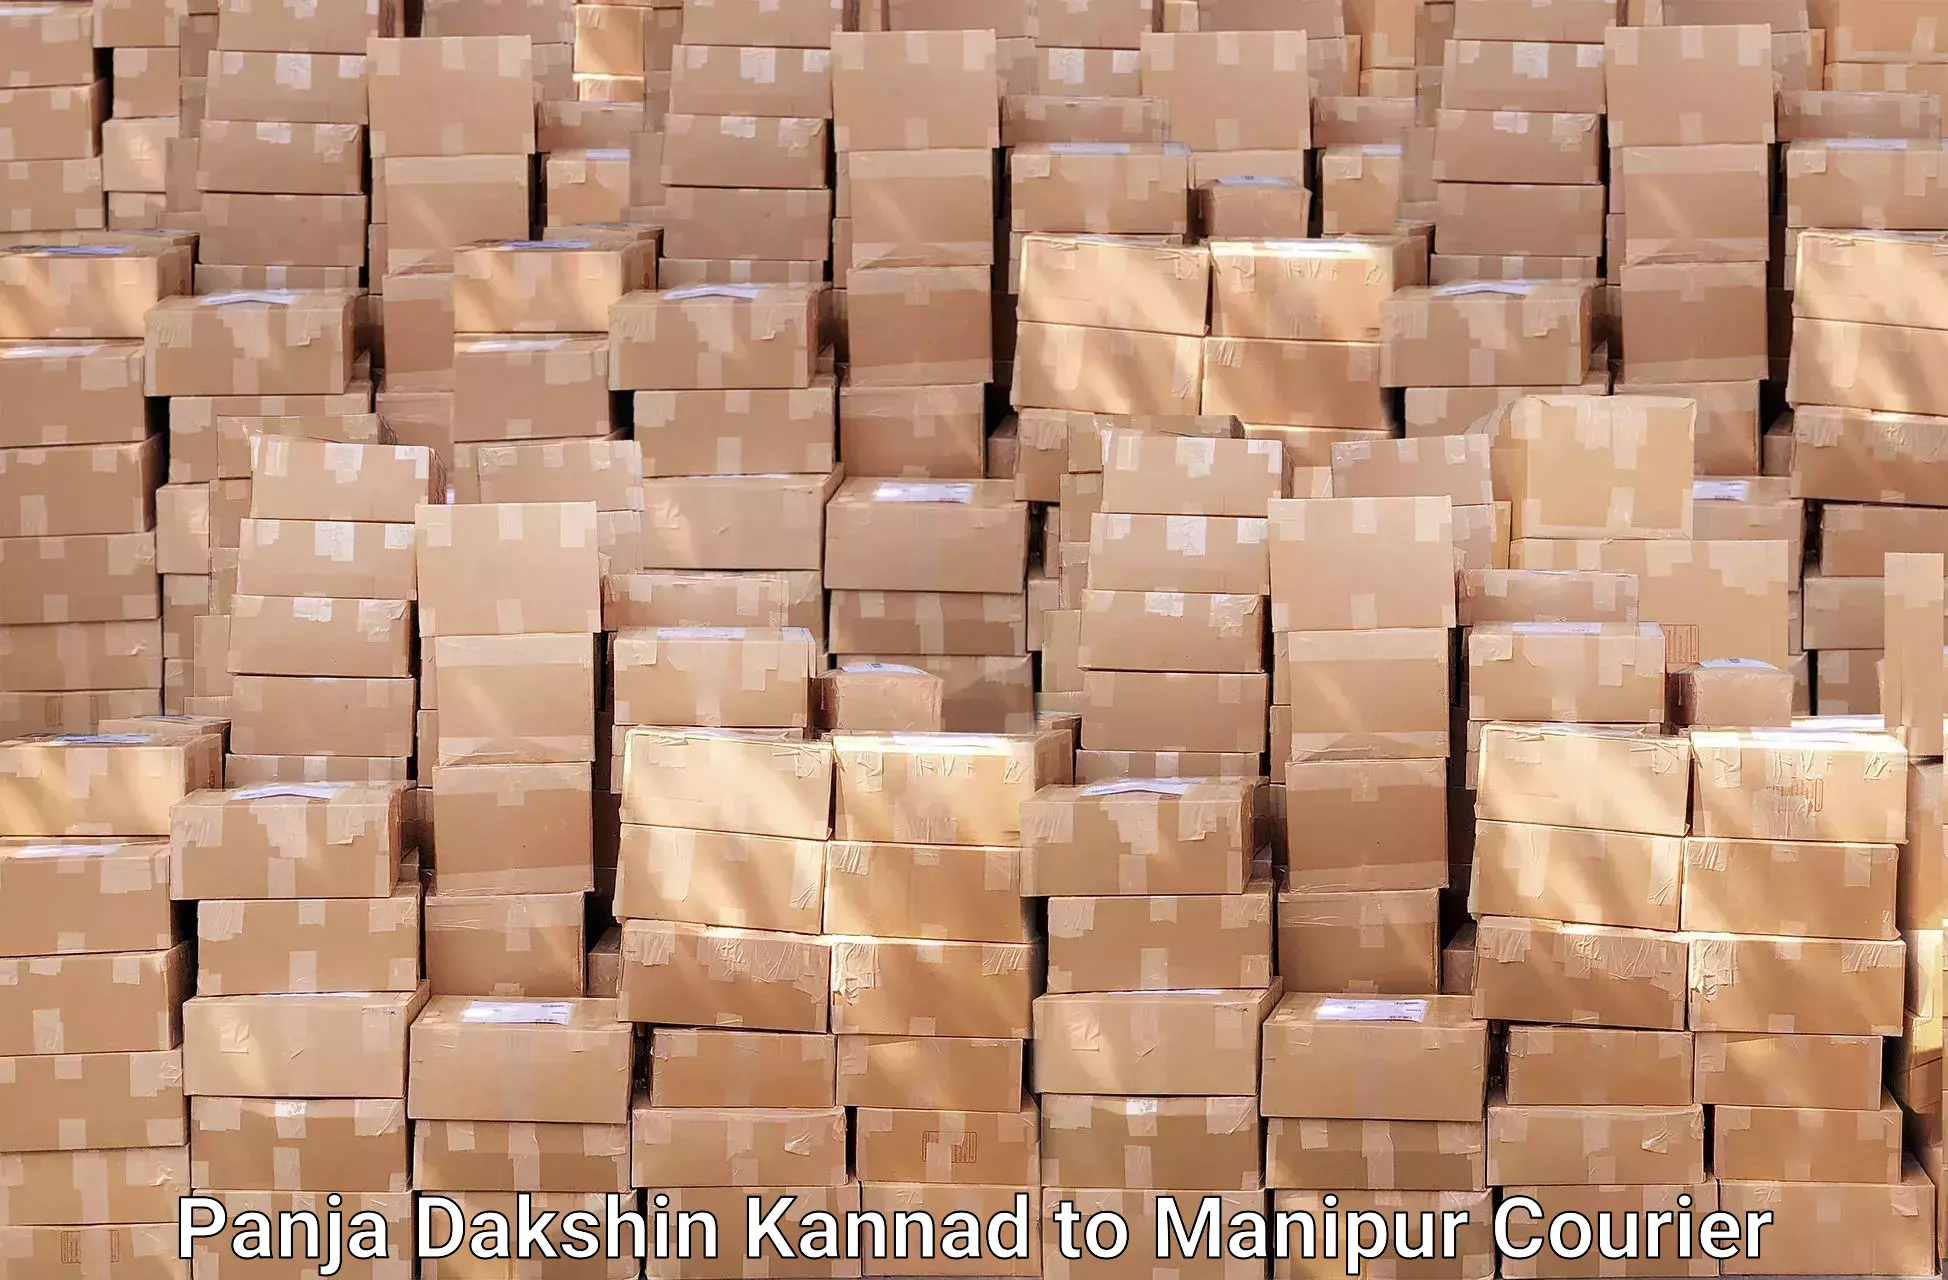 Furniture delivery service Panja Dakshin Kannad to Manipur